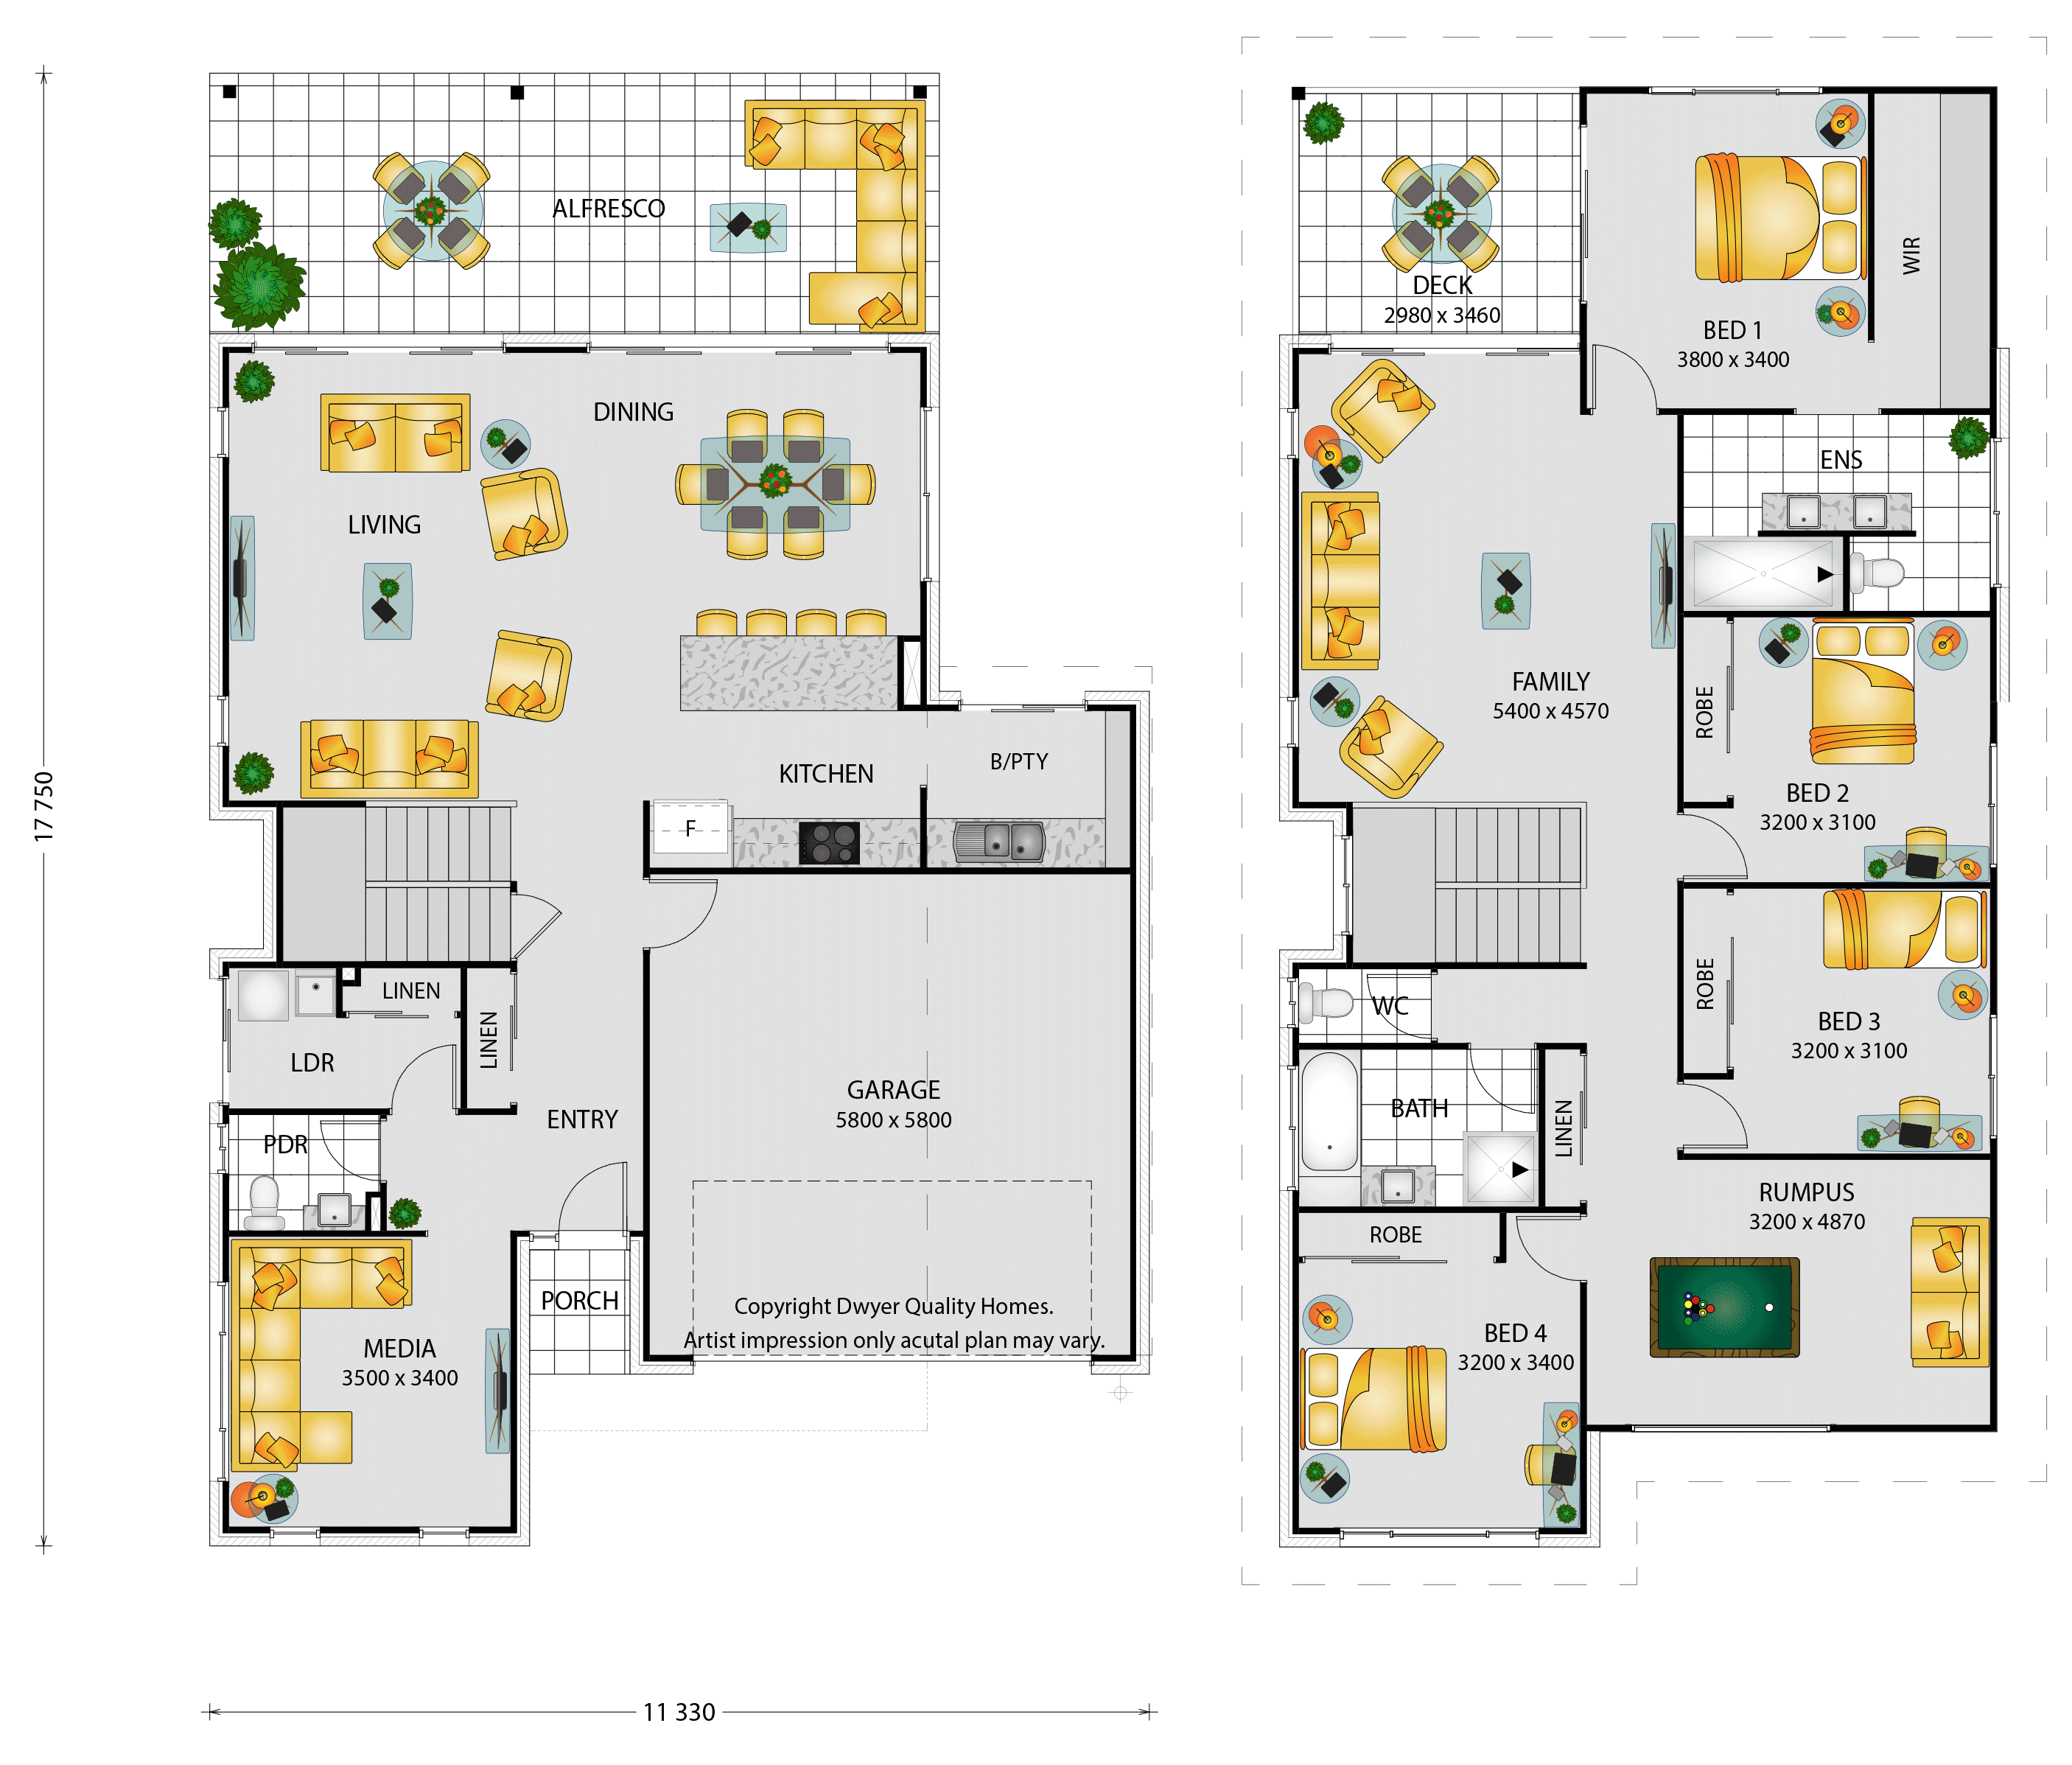 Rio 310 - Floorplans